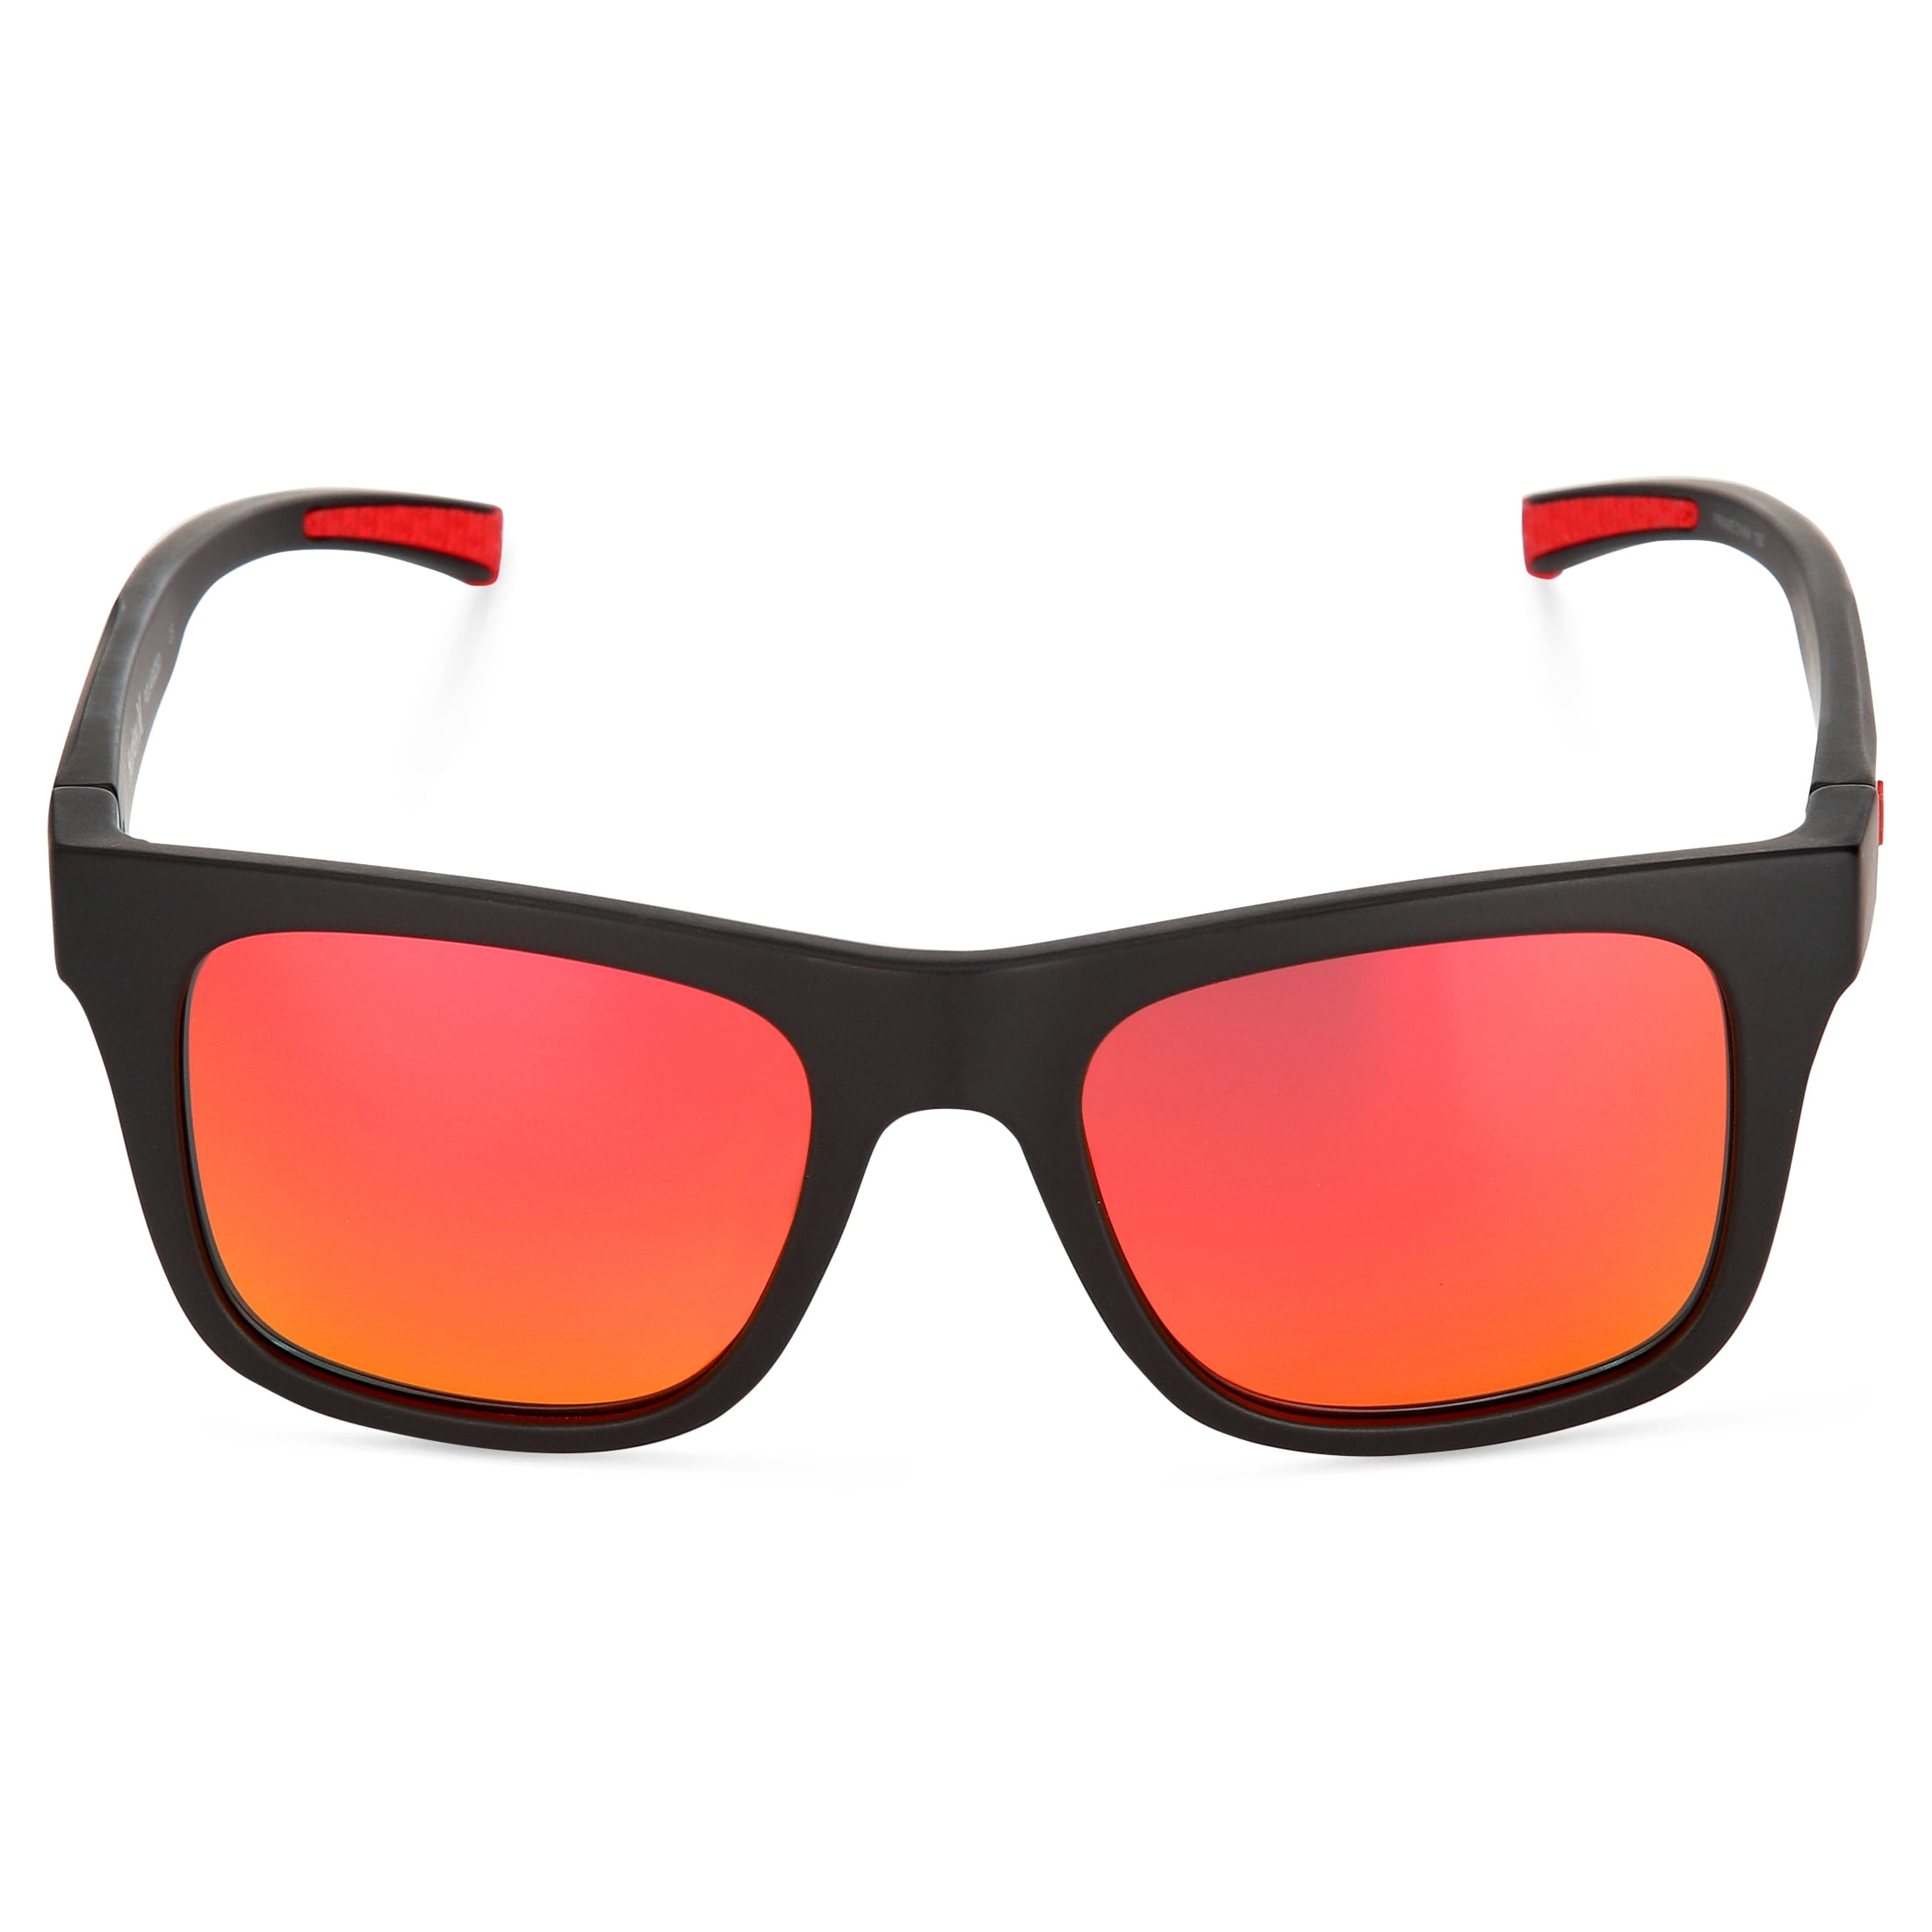 Sport Hurley Rx\'able Sunglasses, Blk/Red, Sunrise, 53-20-140, Case Polarized Men\'s HSM3000P, w/